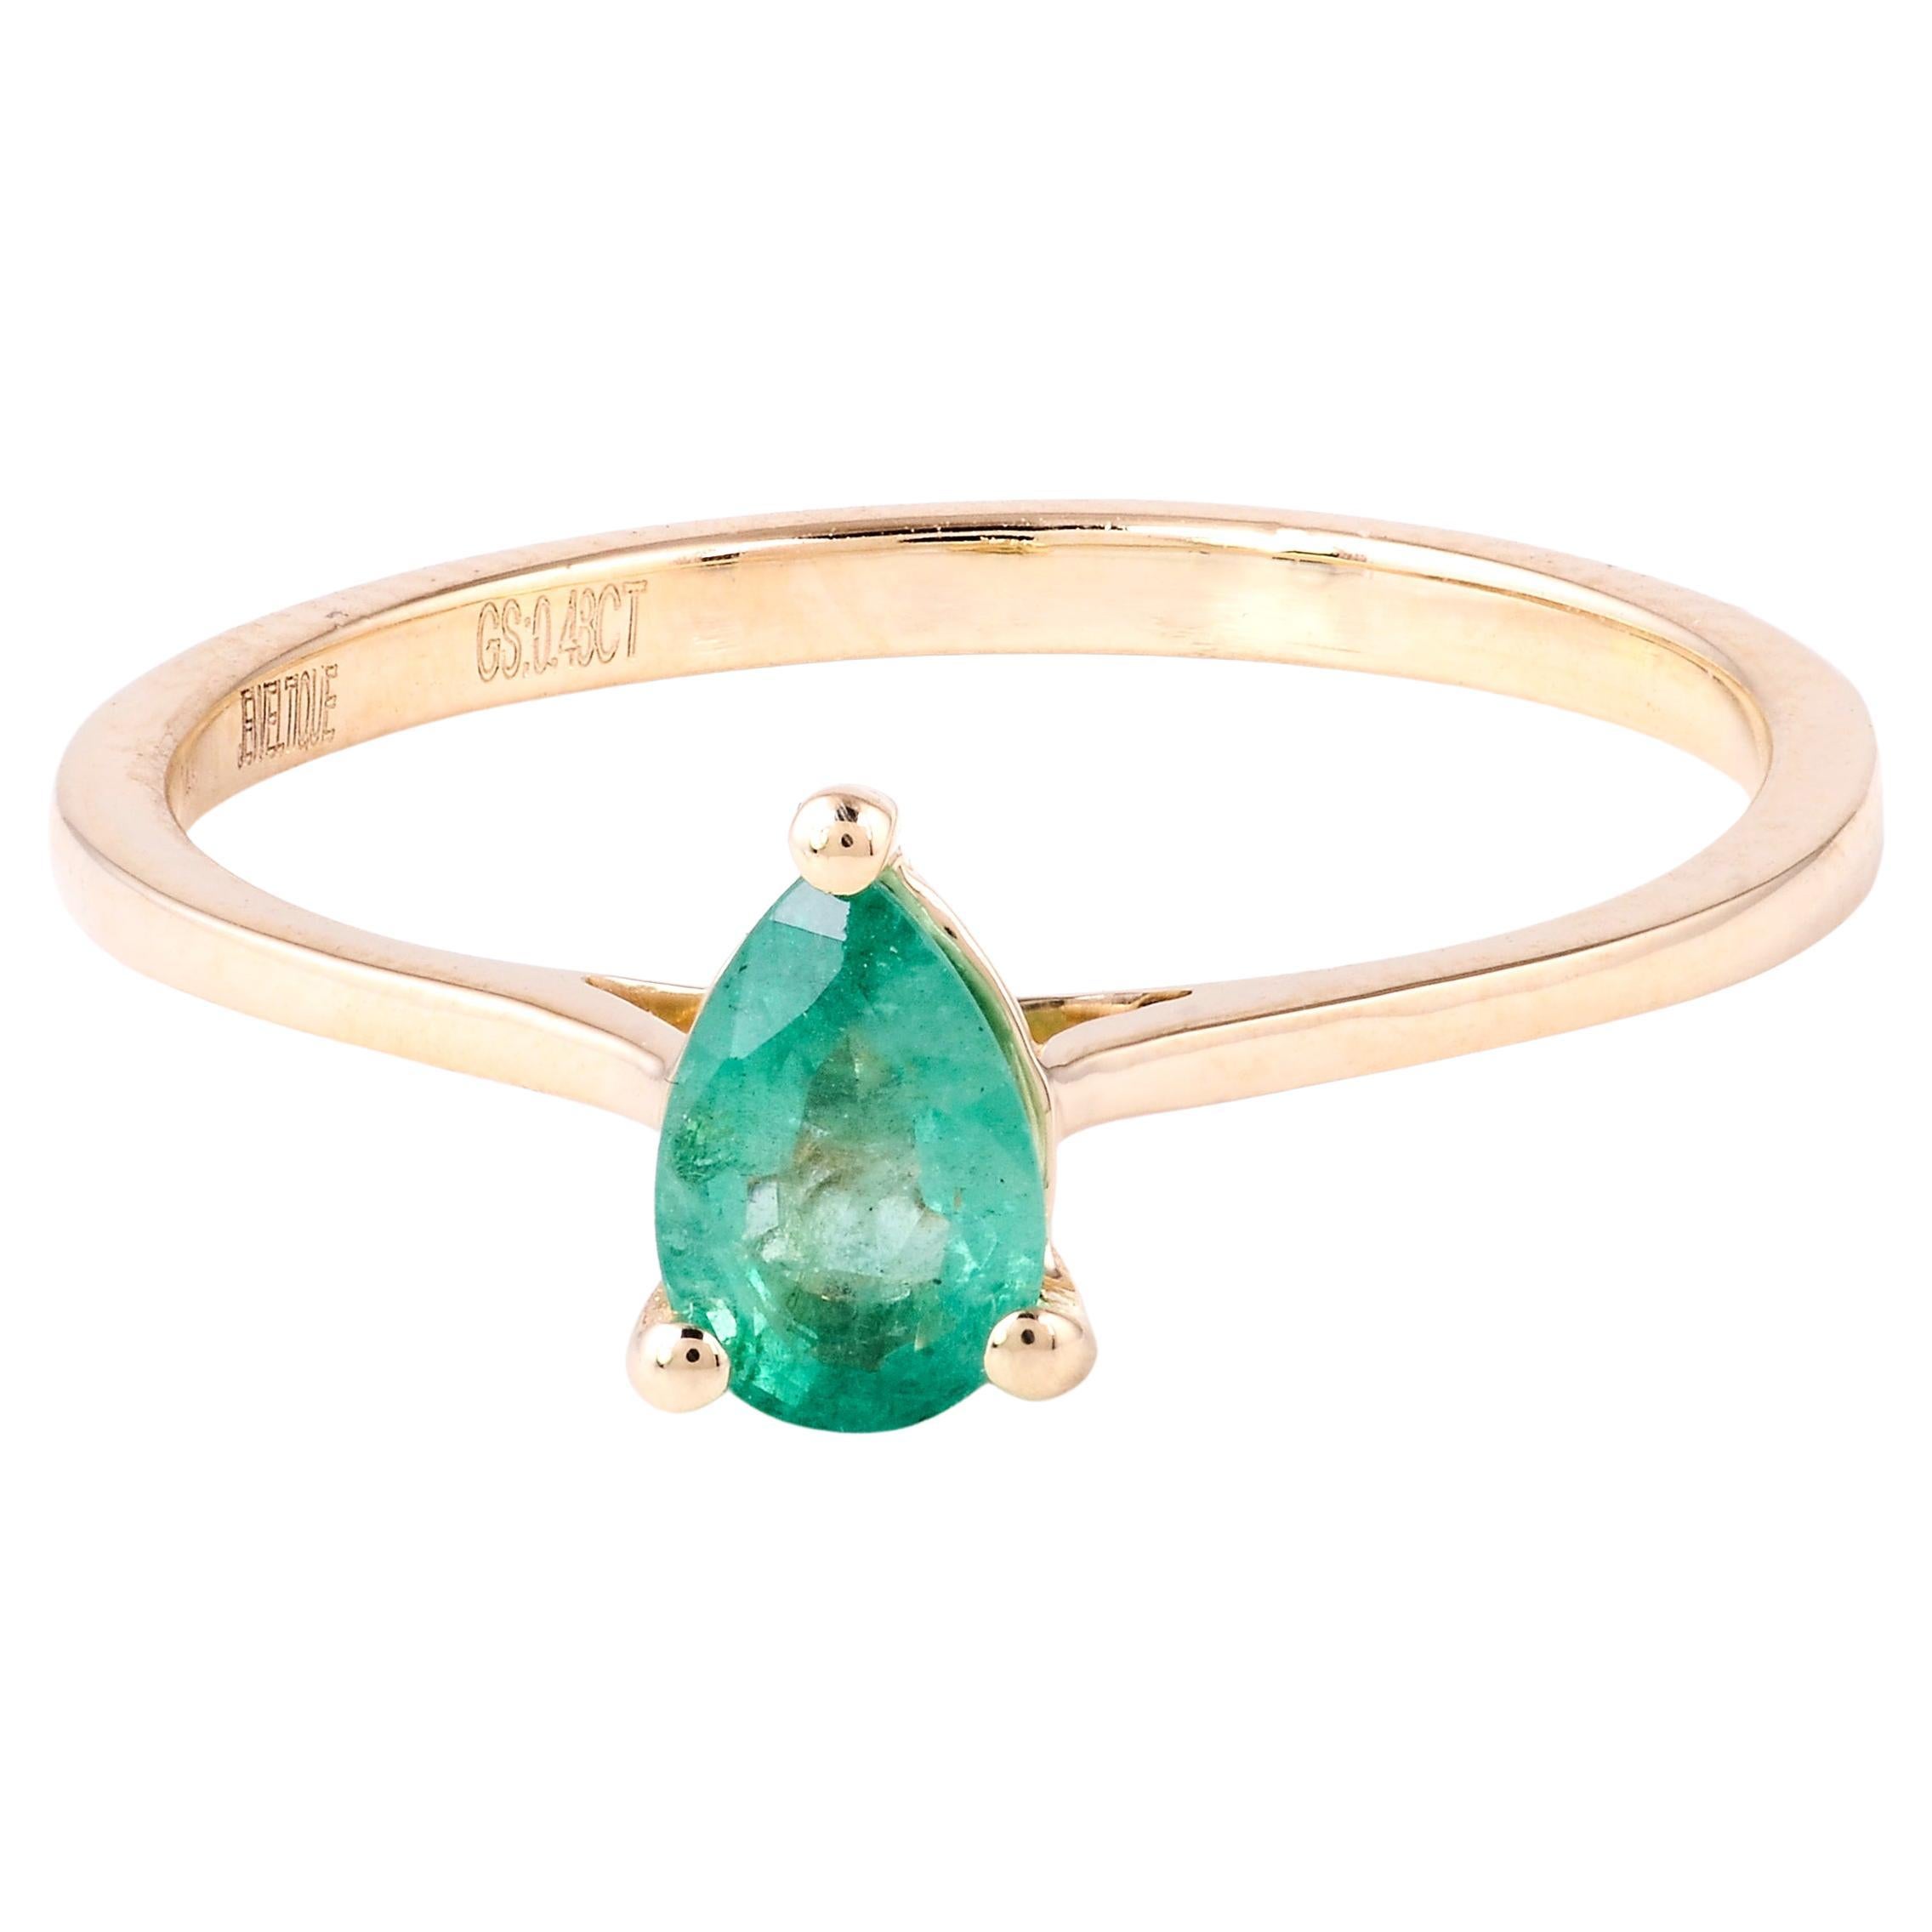 Opulent 14K Emerald Cocktail Ring, Size 7 - Elegant Statement Jewelry